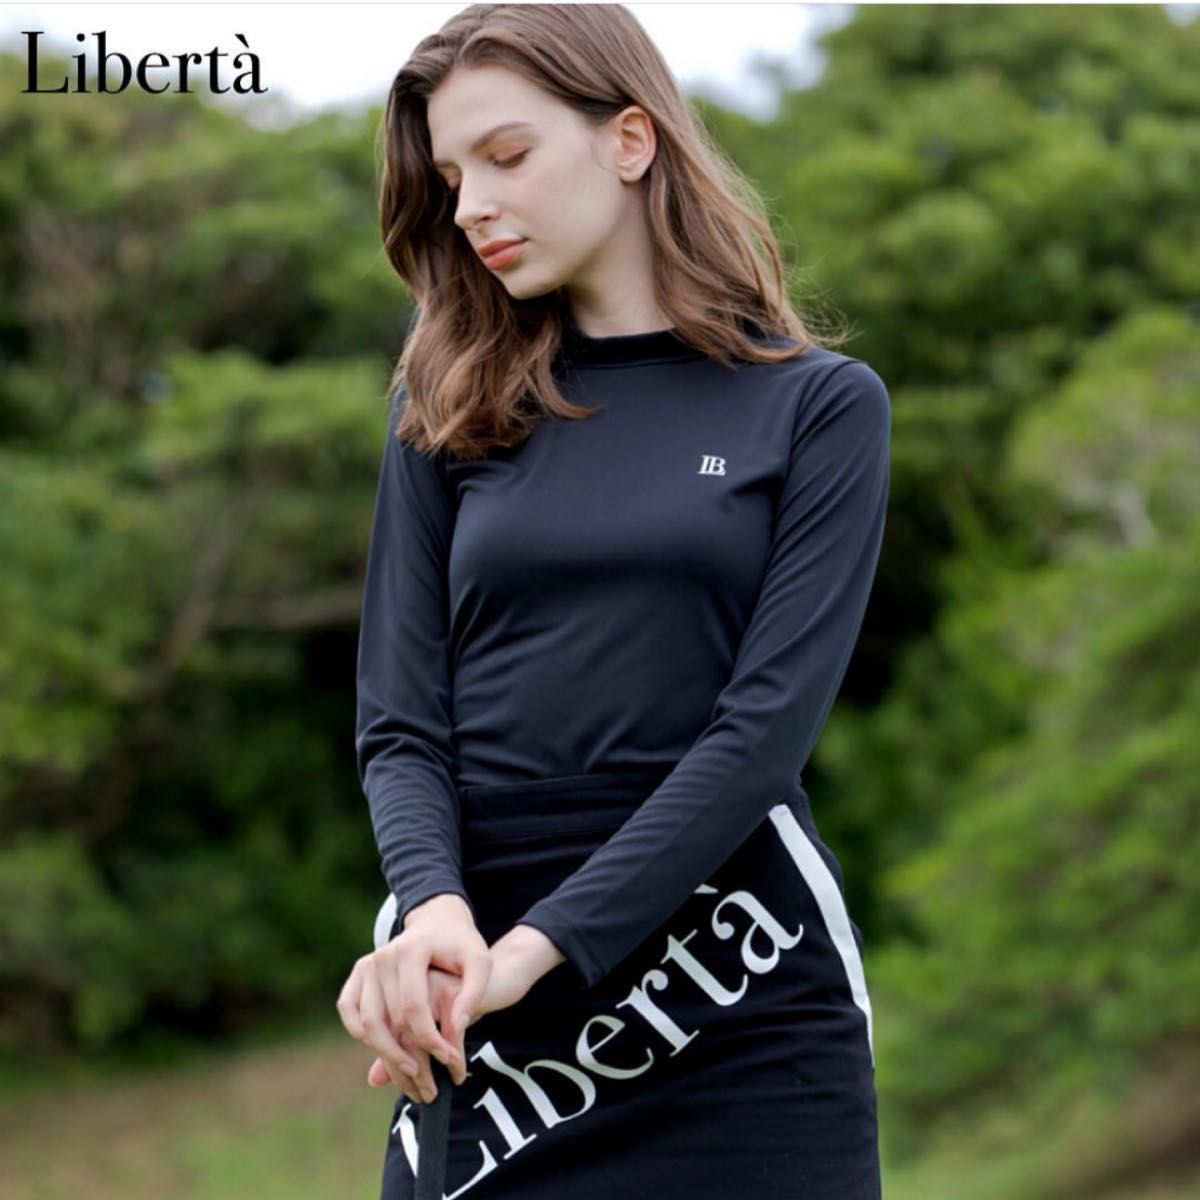 Libertaゴルフスカート×モックネック#新品未使用#定価¥49.000 黒スカート 緑モックネック